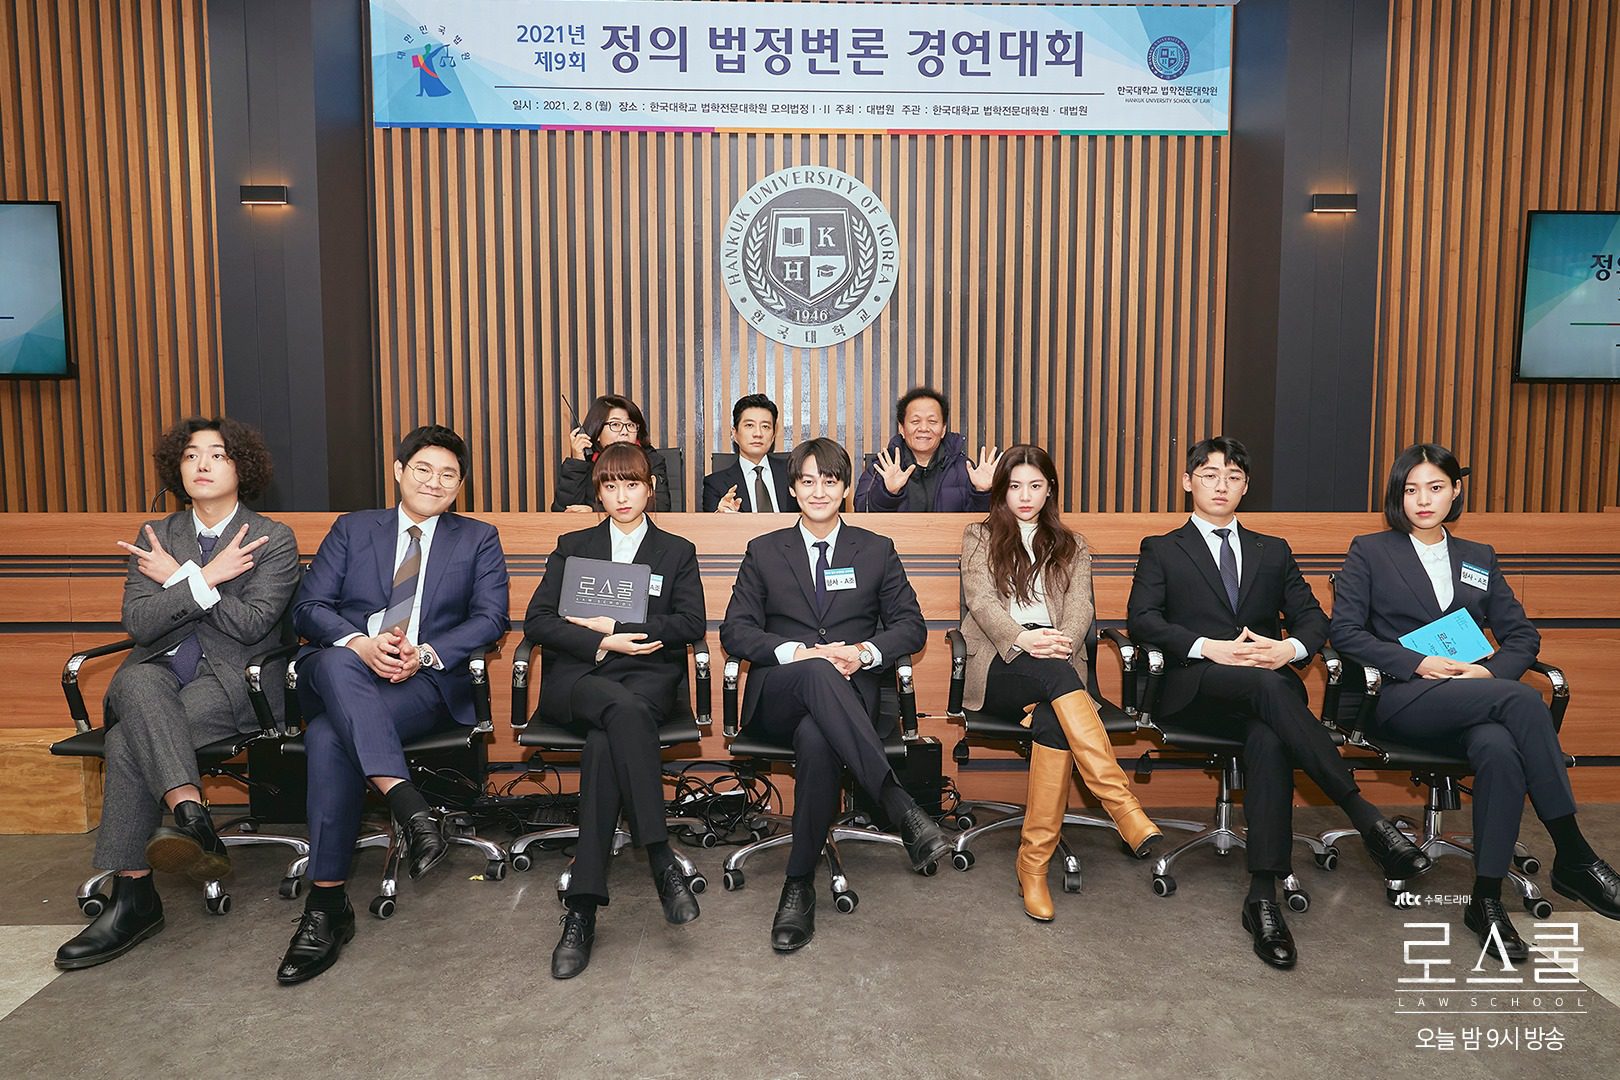 31 Best Law Korean Drama Series to Watch